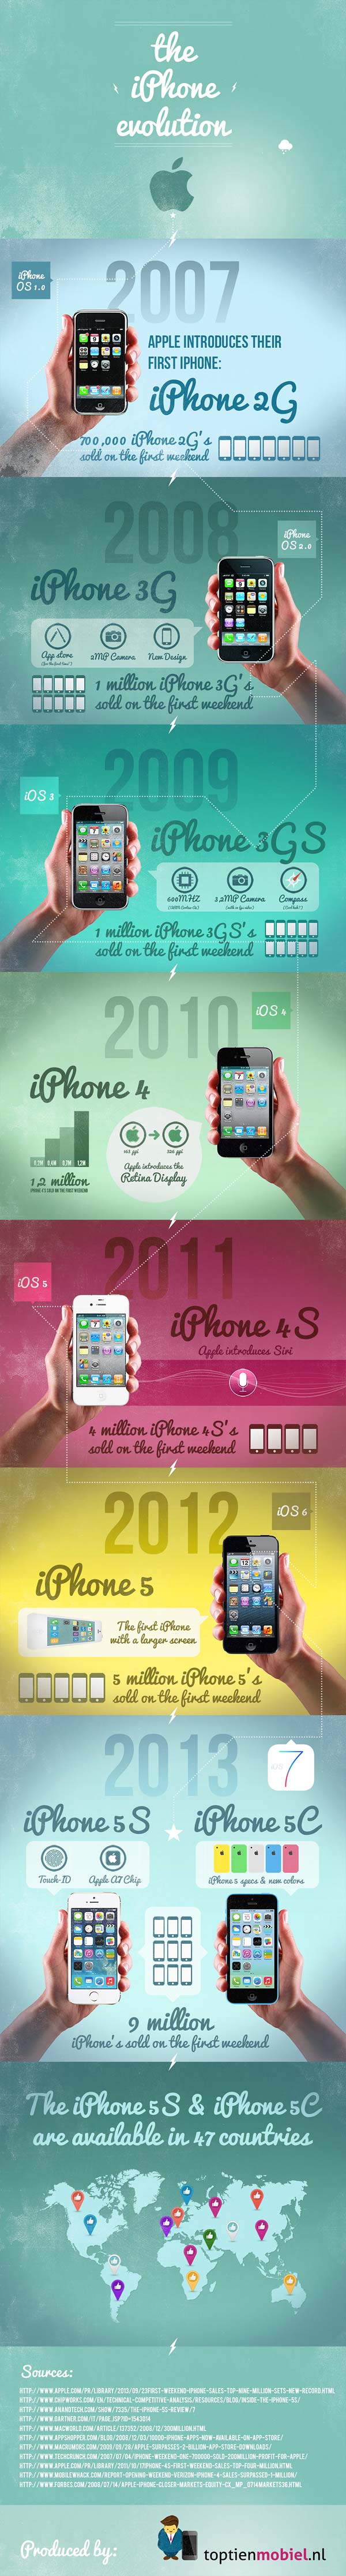 iPhone history Courtesy: toptienmobiel